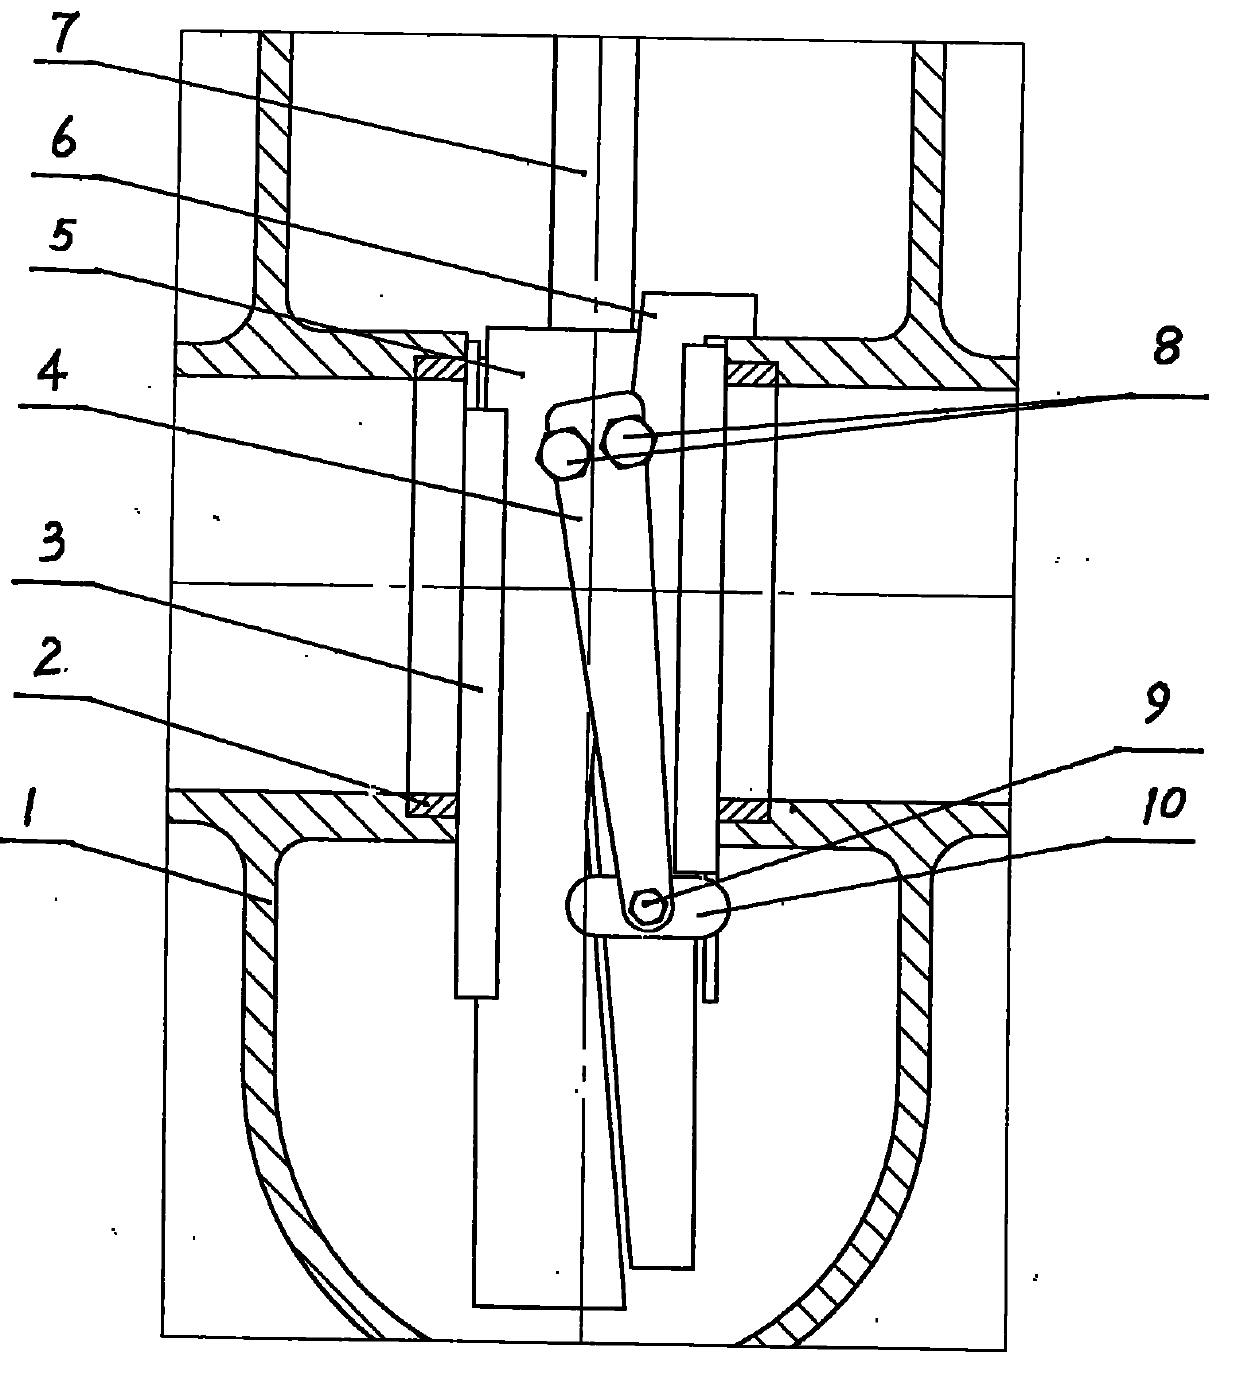 Expansion flat gate valve